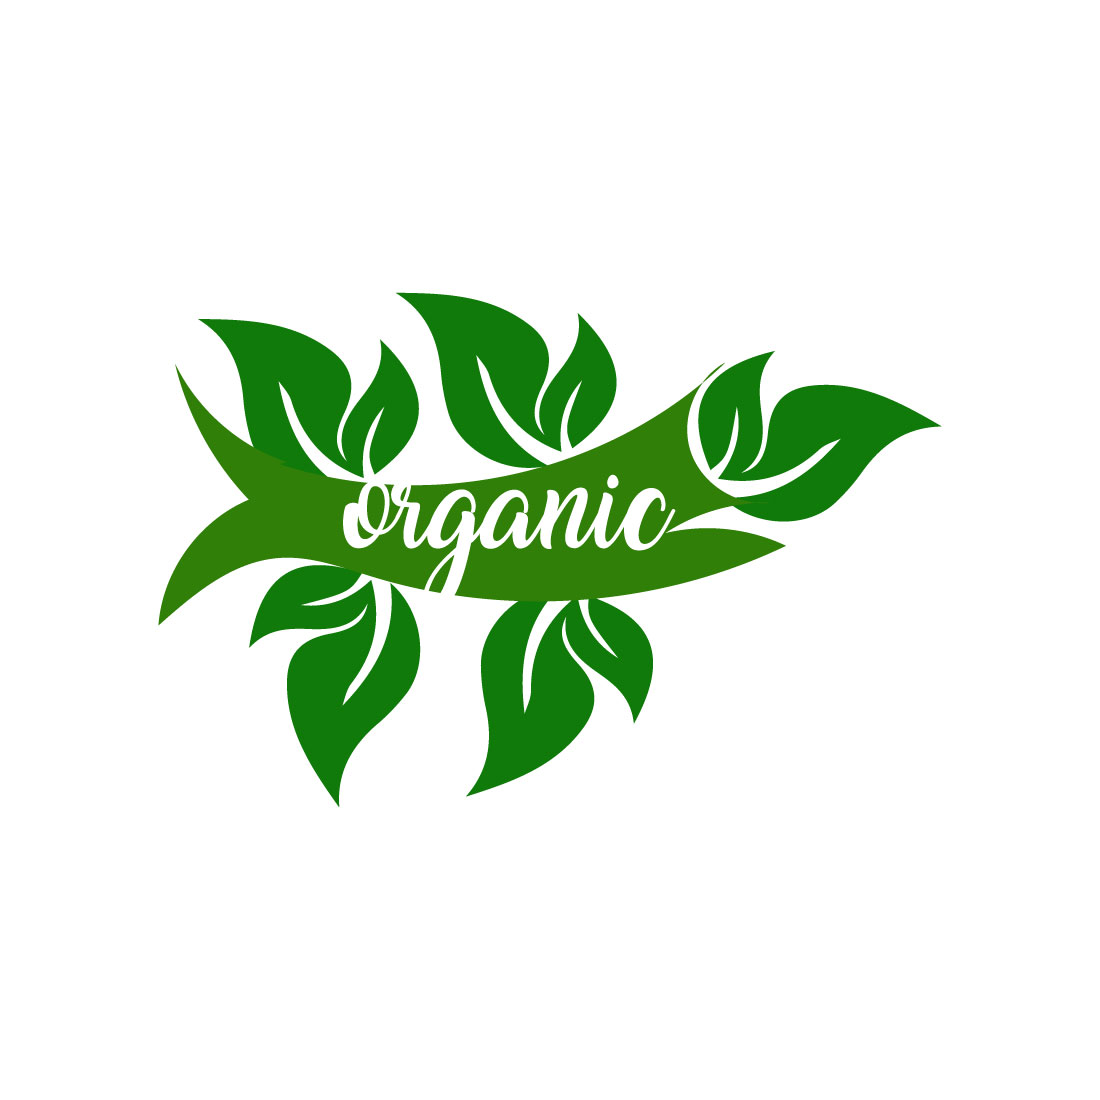 Free organic label logo preview image.